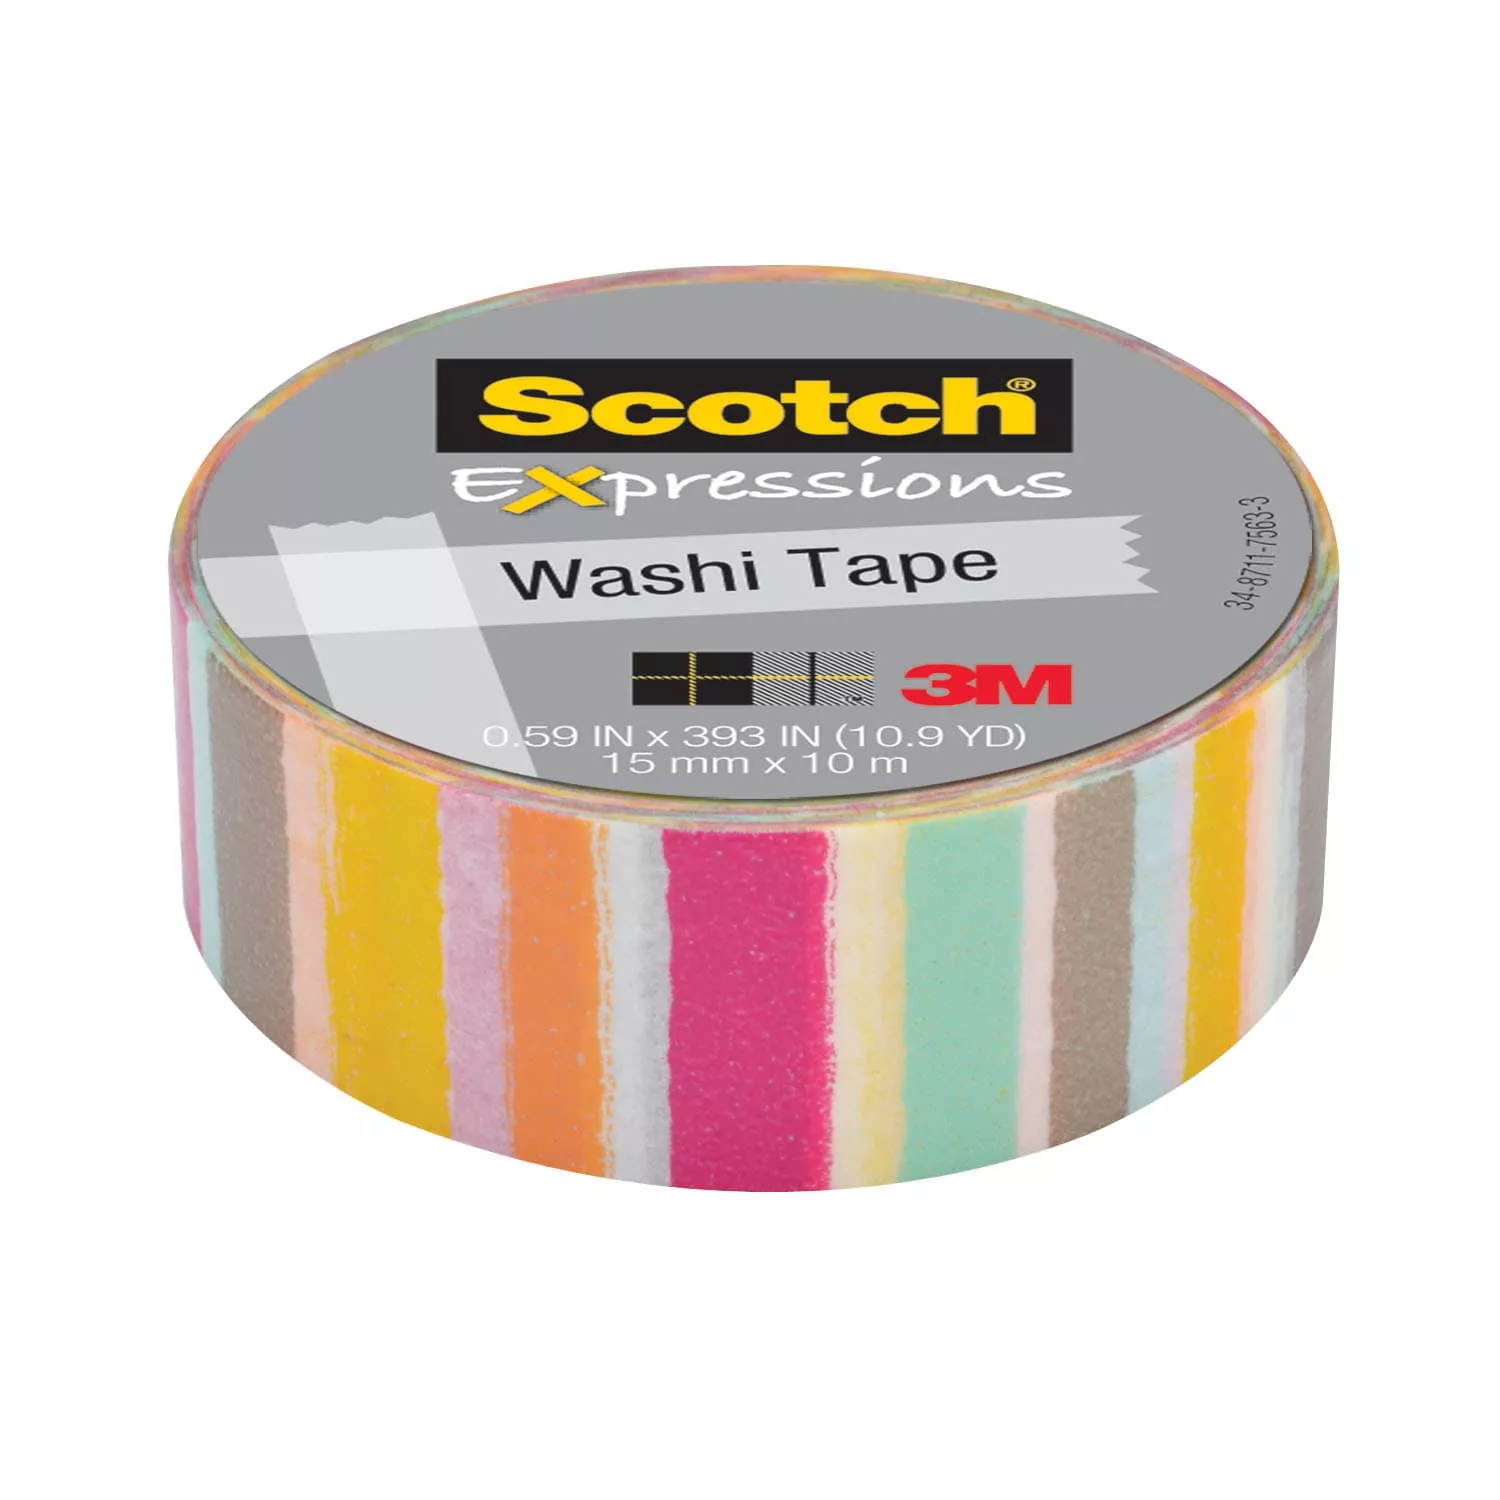 Scotch® Expressions Washi Tape C314-P37, .59 in x 393 in (15 mm x 10 m)
Blurred Lines